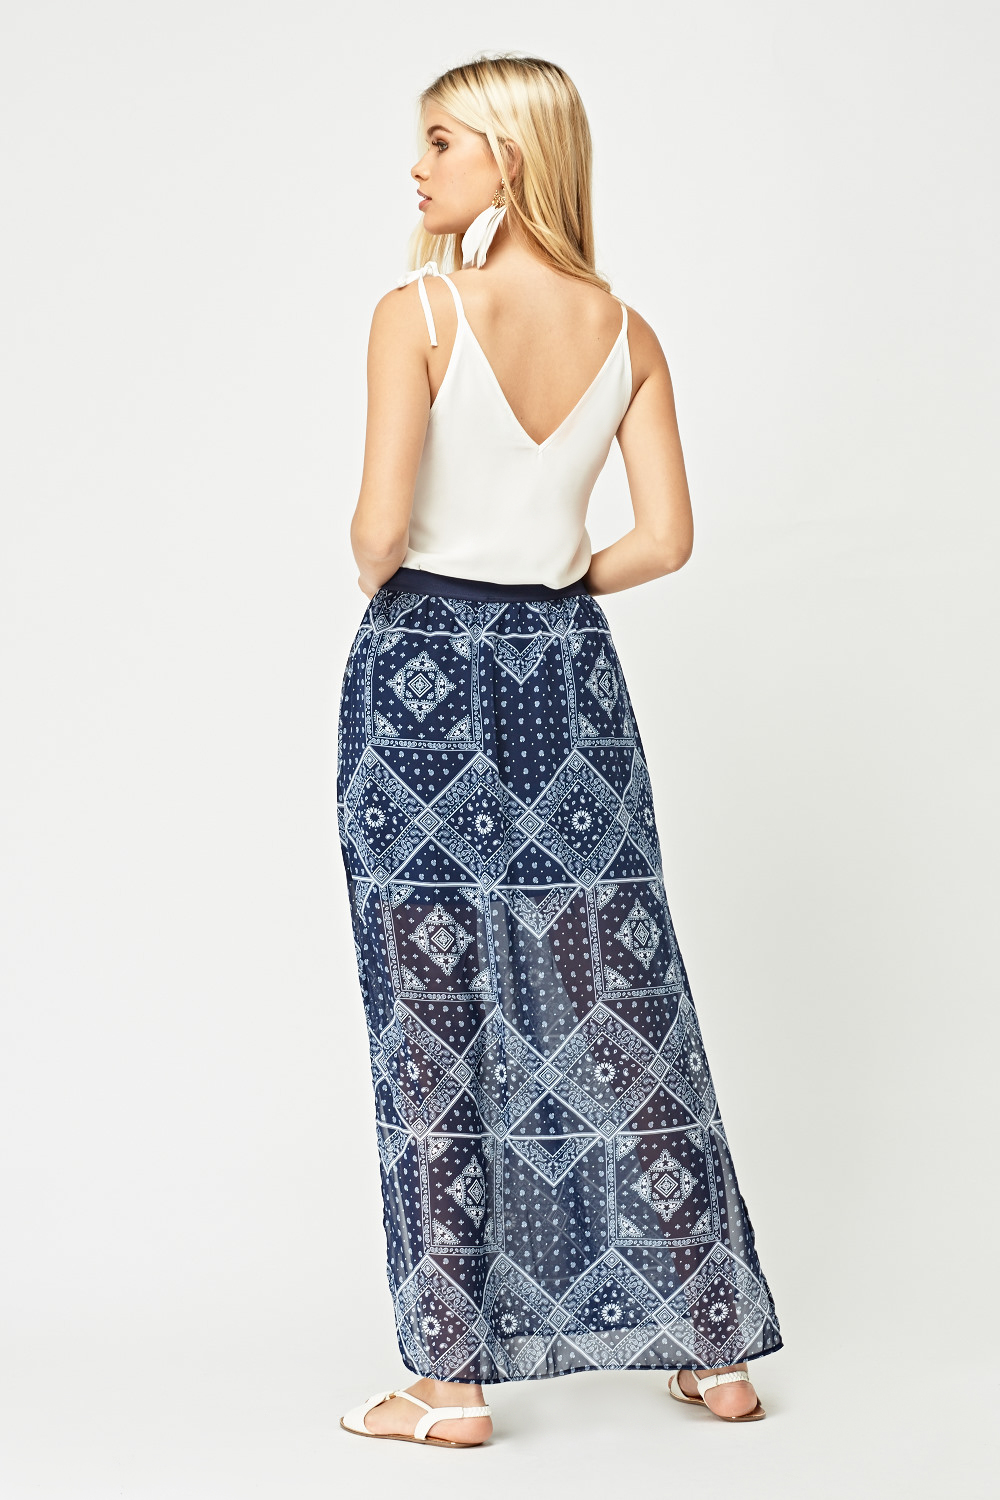 Bandana Print Sheer Maxi Skirt - Just $3